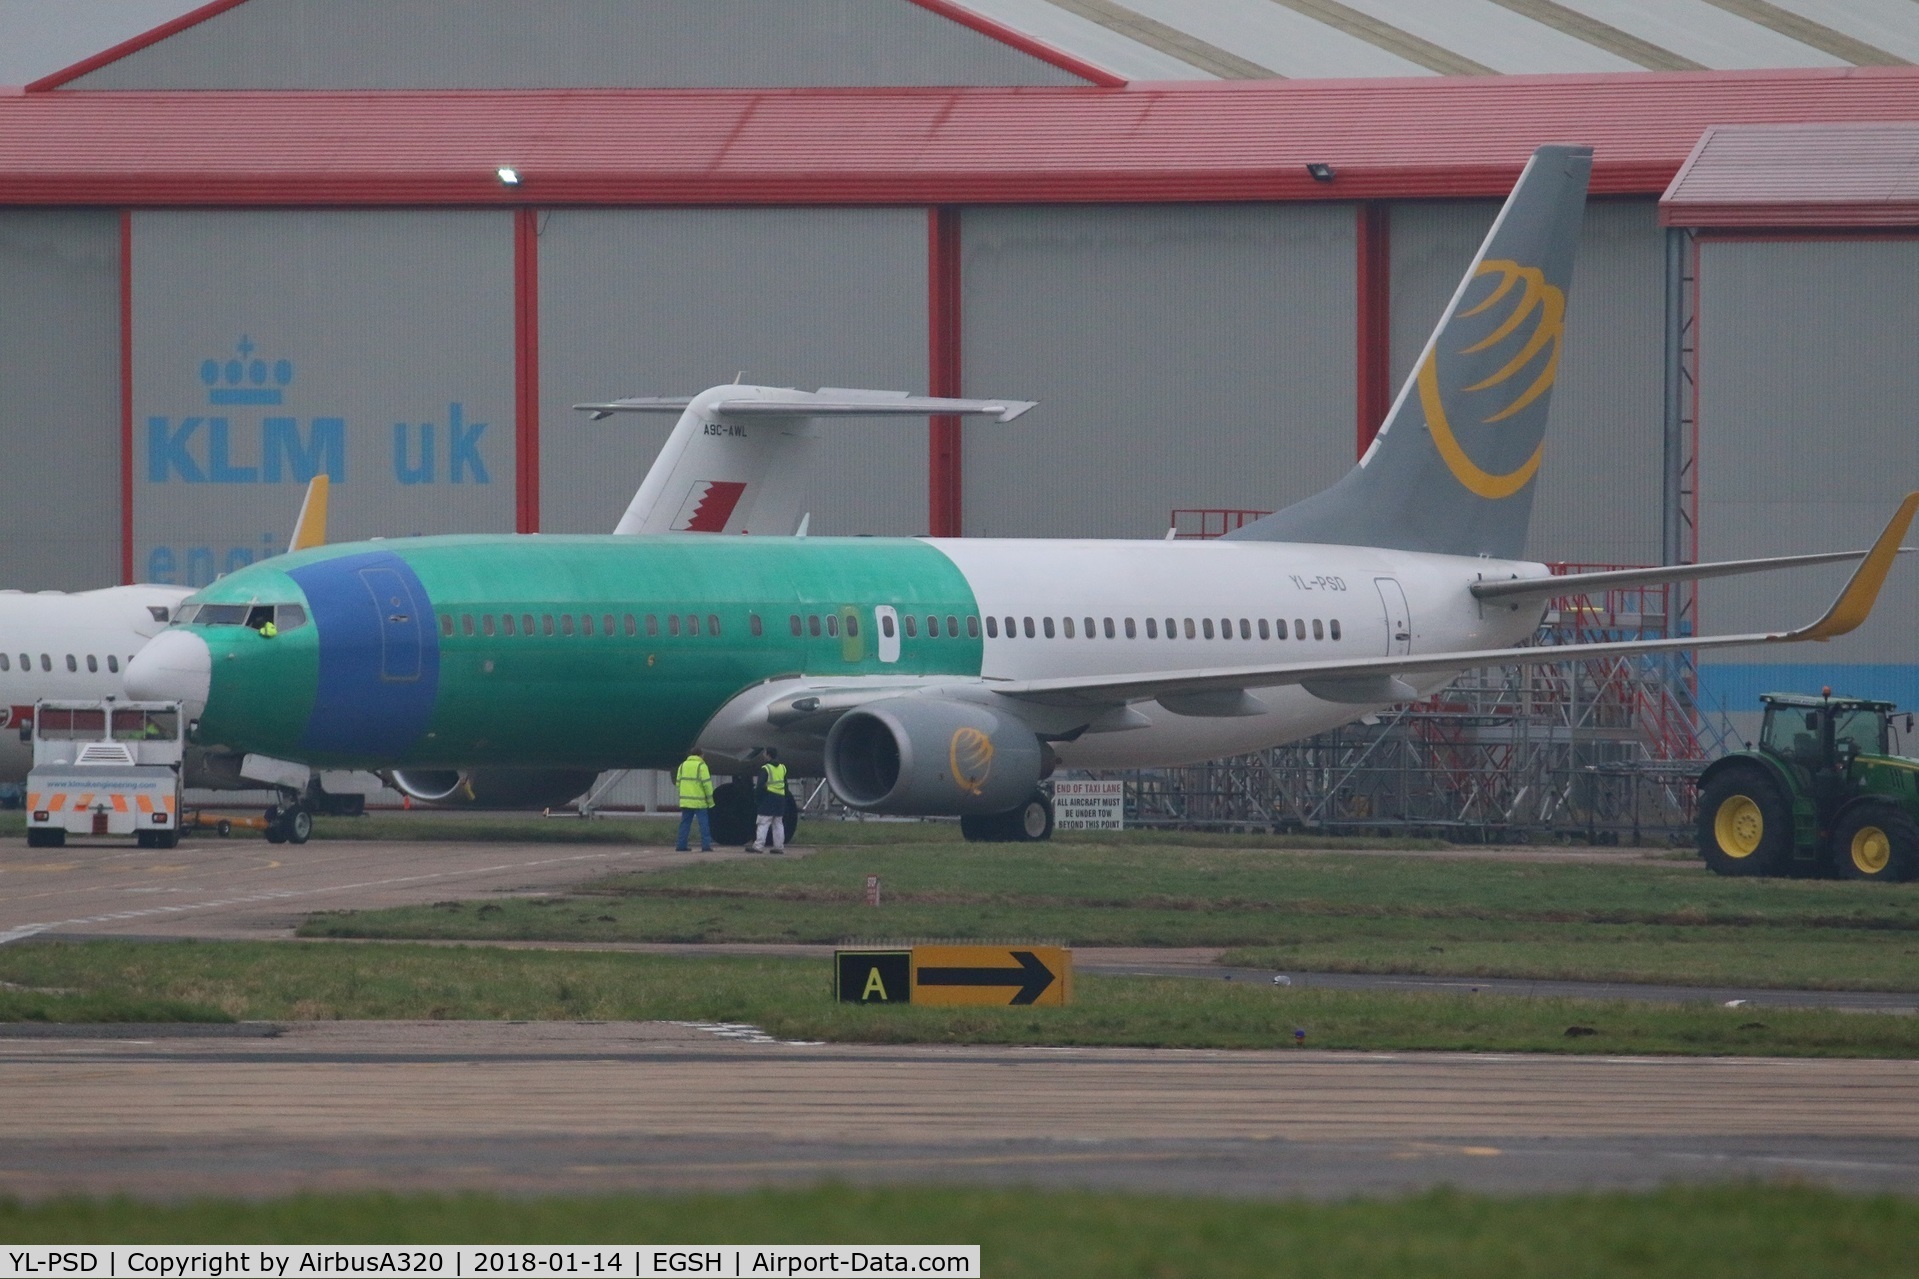 YL-PSD, 2000 Boeing 737-86N C/N 28618, Emerging from KLM hangar following skin replacement work